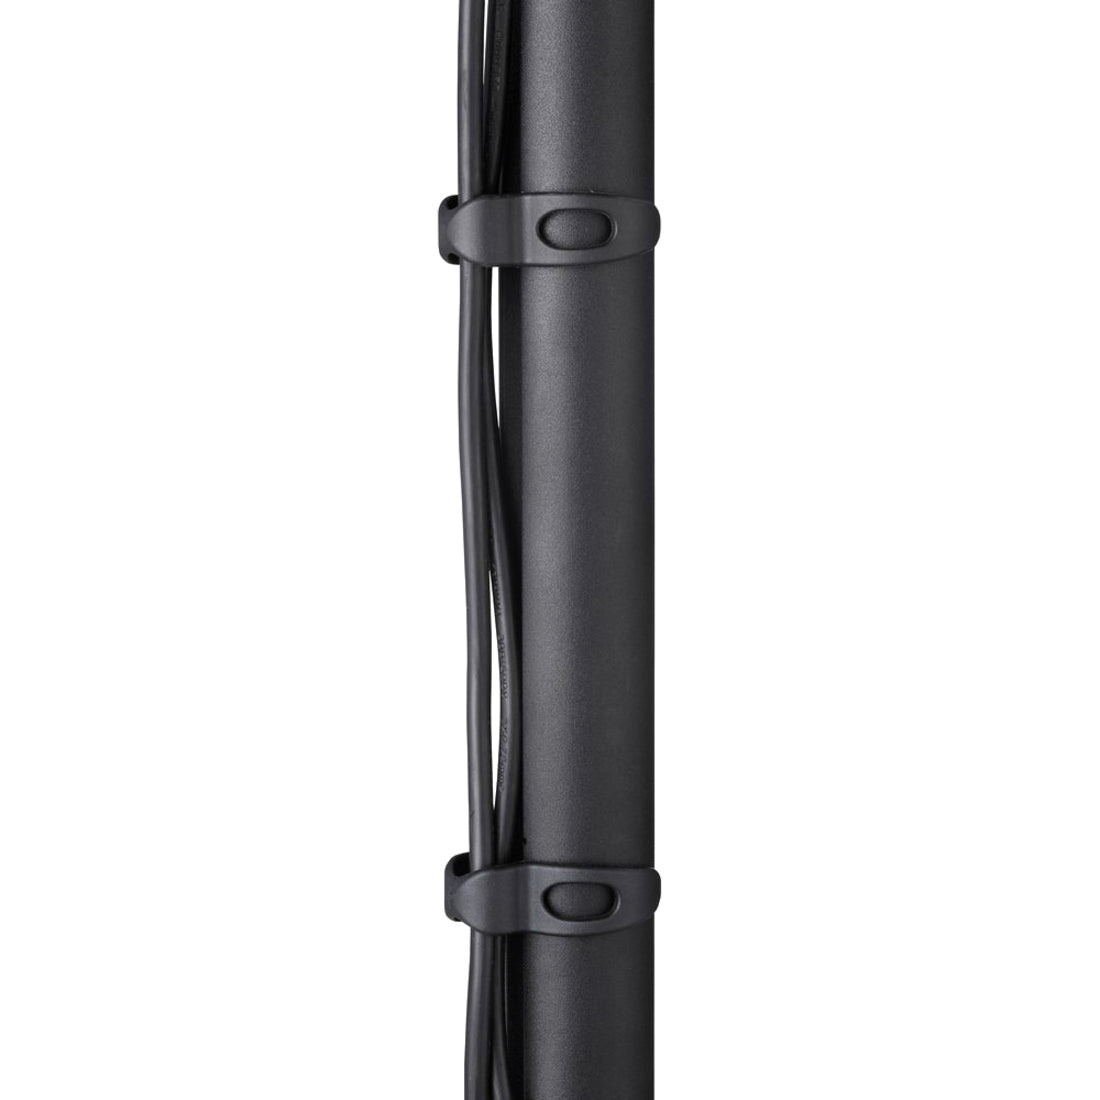 Atdec SD-DP-750 Quick Shift Donut Pole Mounting Kit, Dual LCD Mounts for 12"-24" Screens, Black